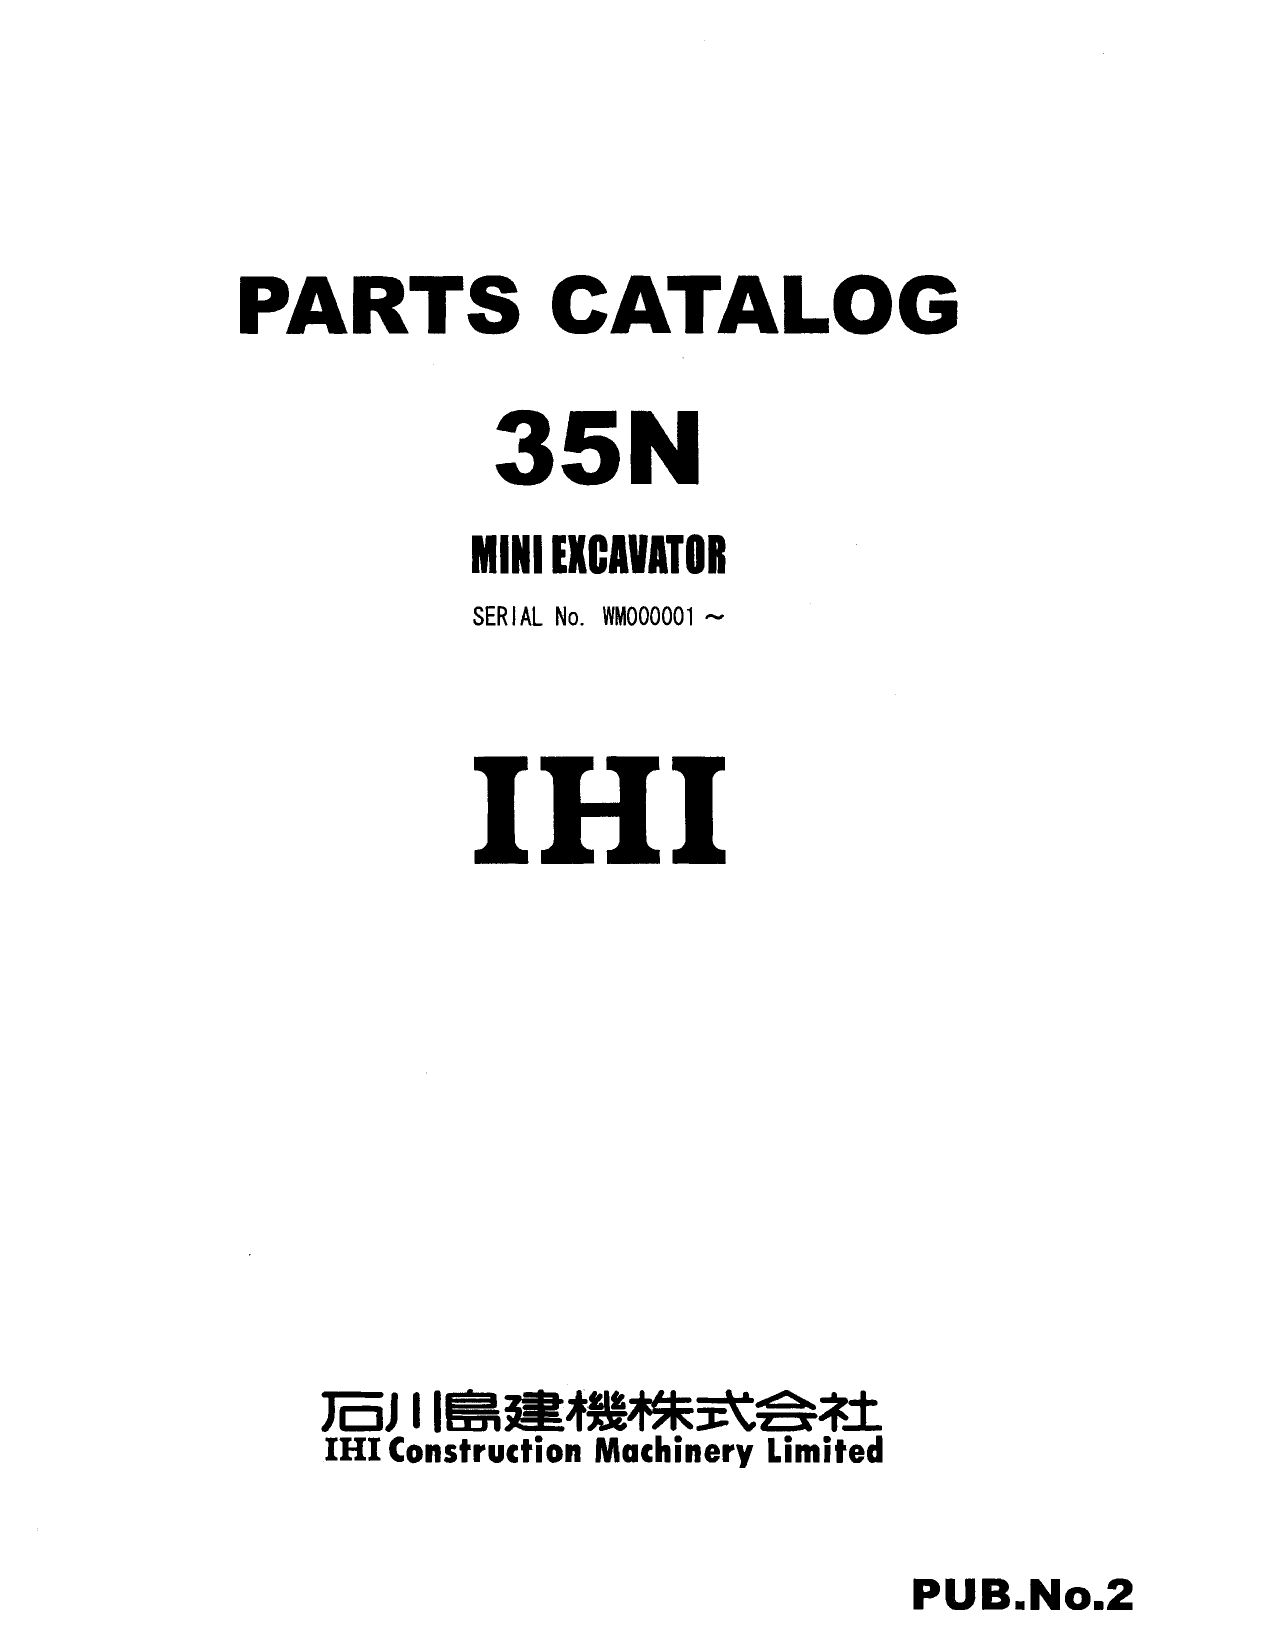 IHI 35N mini excavator parts catalog Preview image 1